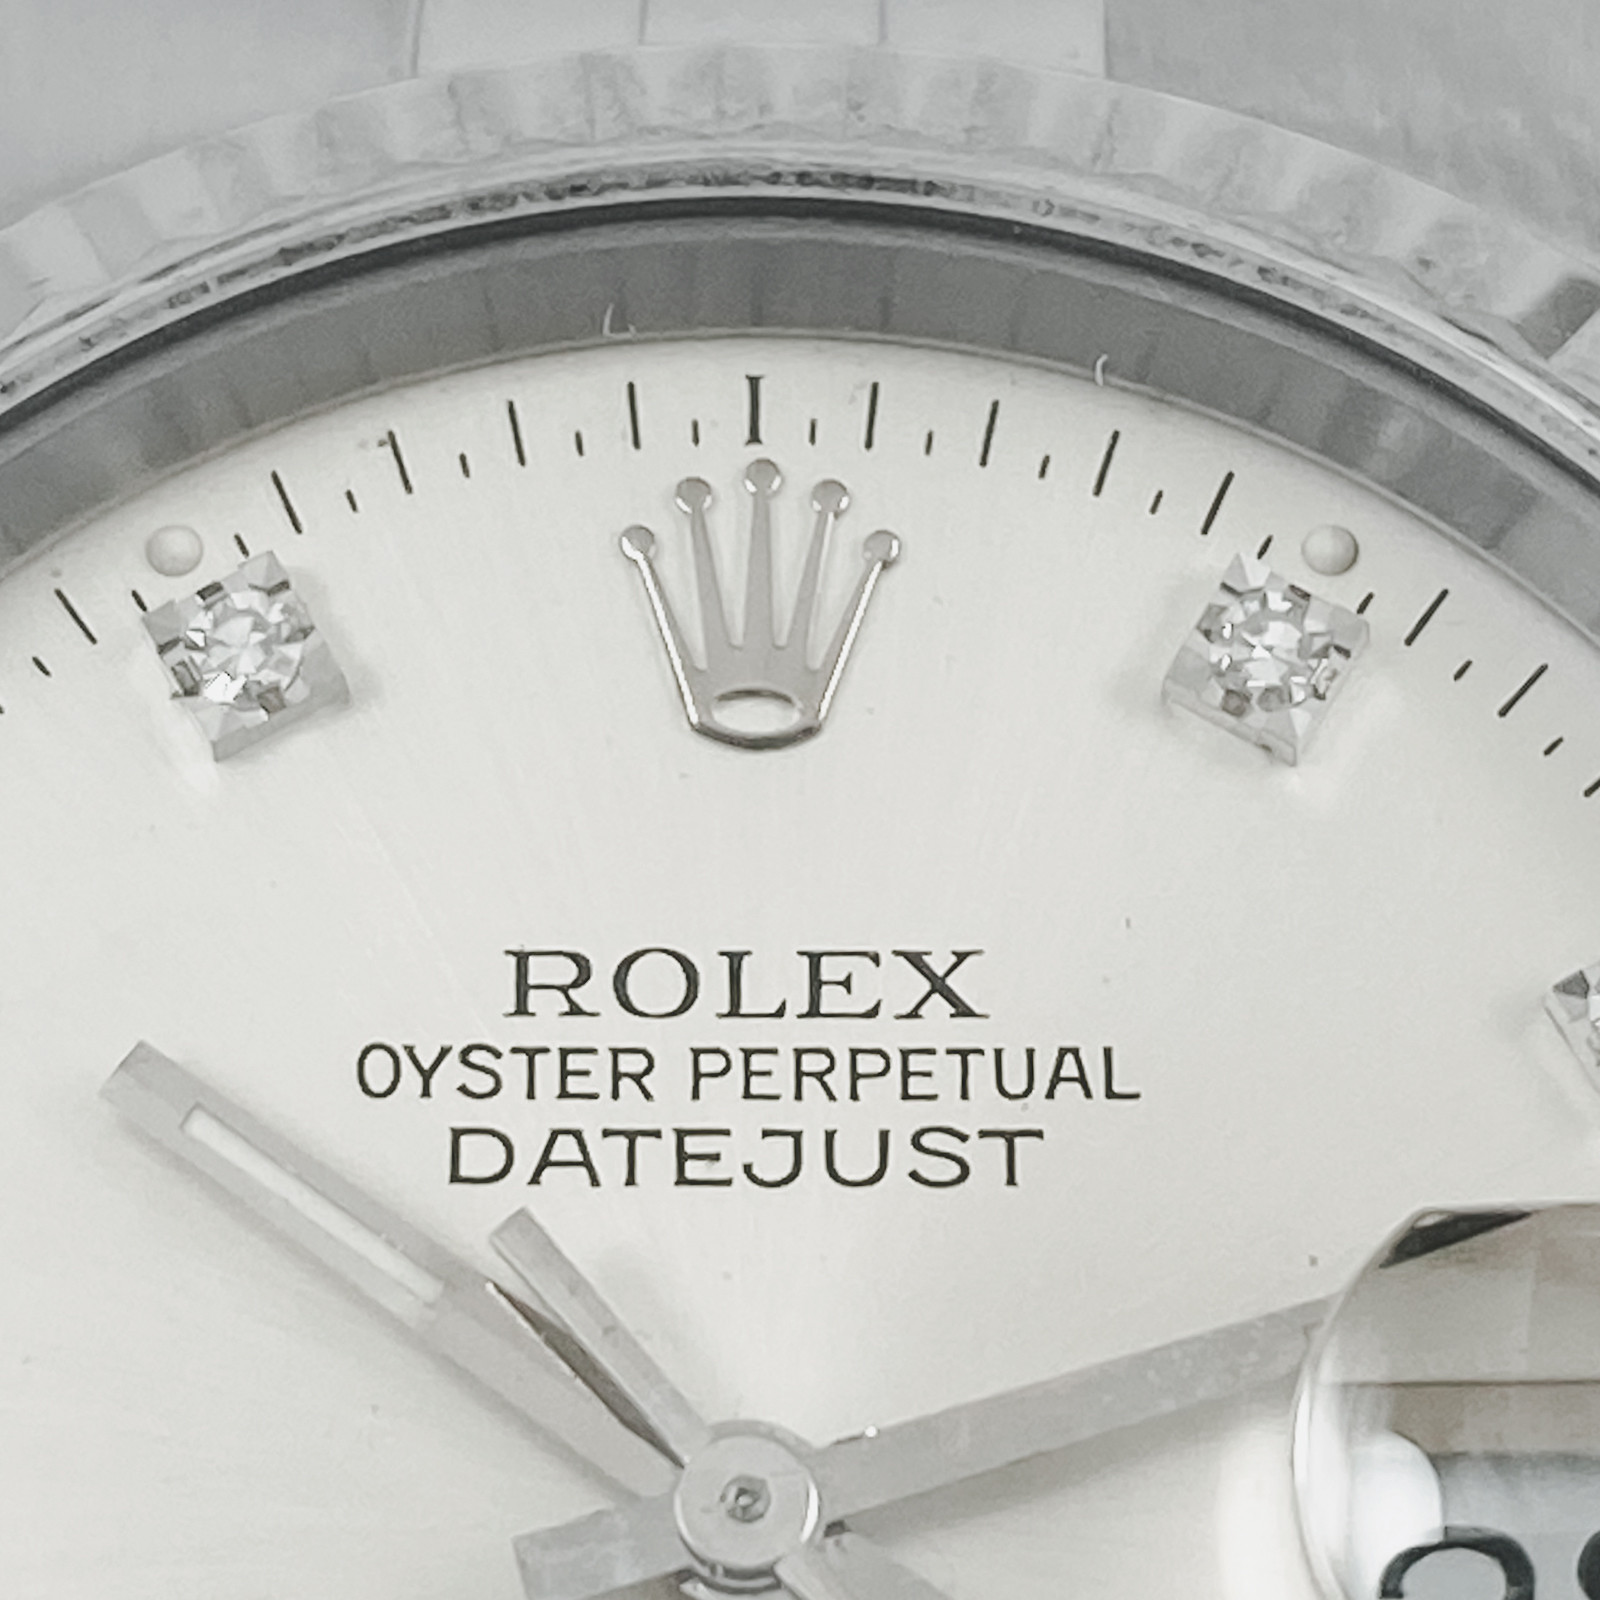 Rolex Datejust 16234 Factory Diamond Dial